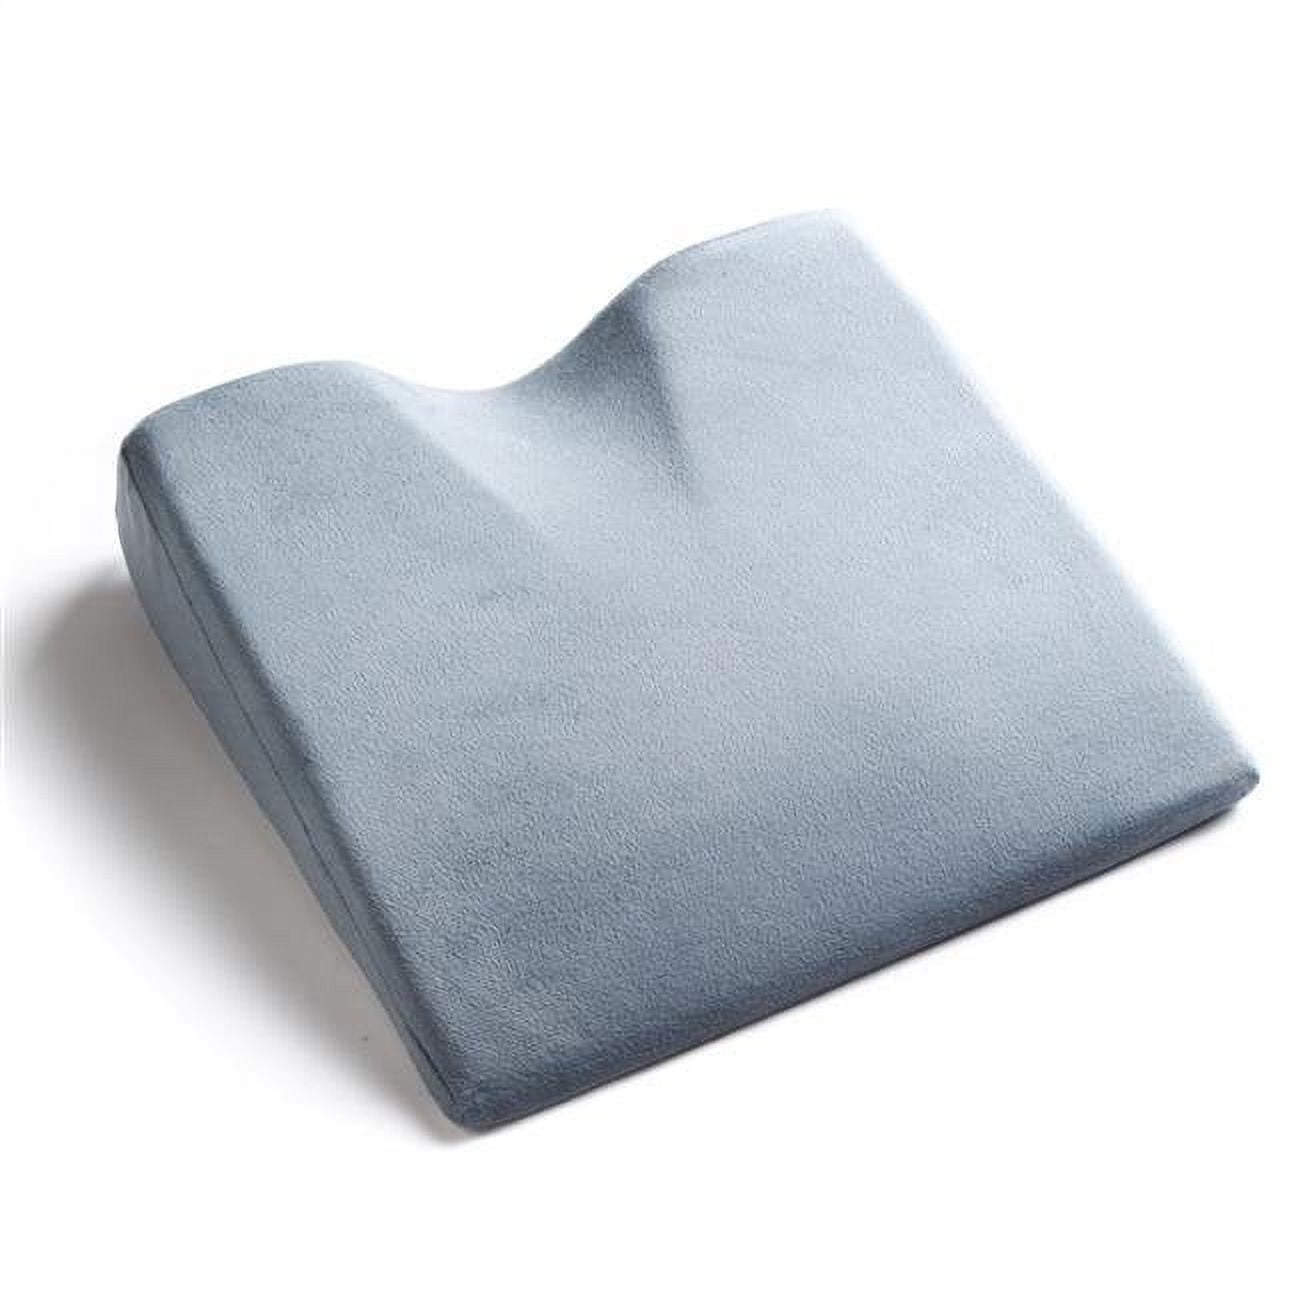 Seat Riser Wedge Cushion– ComfortFinds